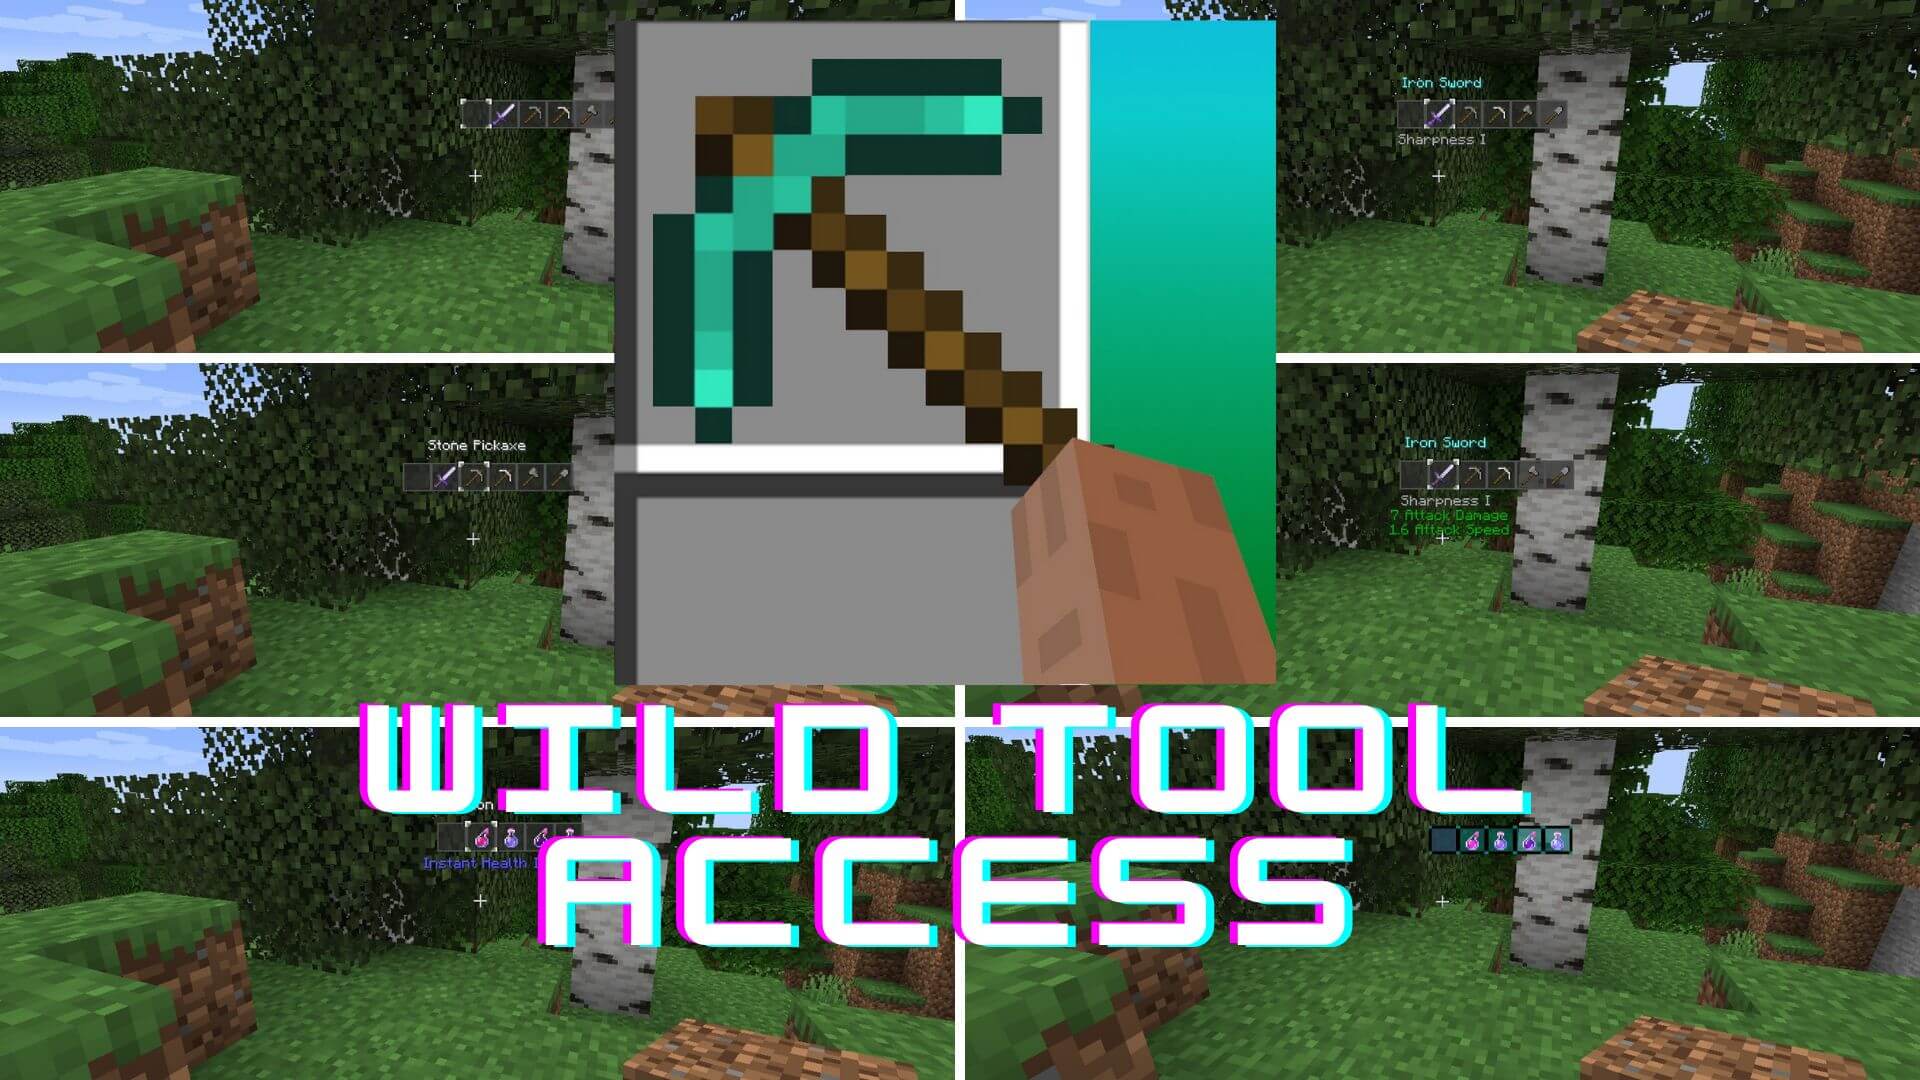 Wild Tool Access Mod